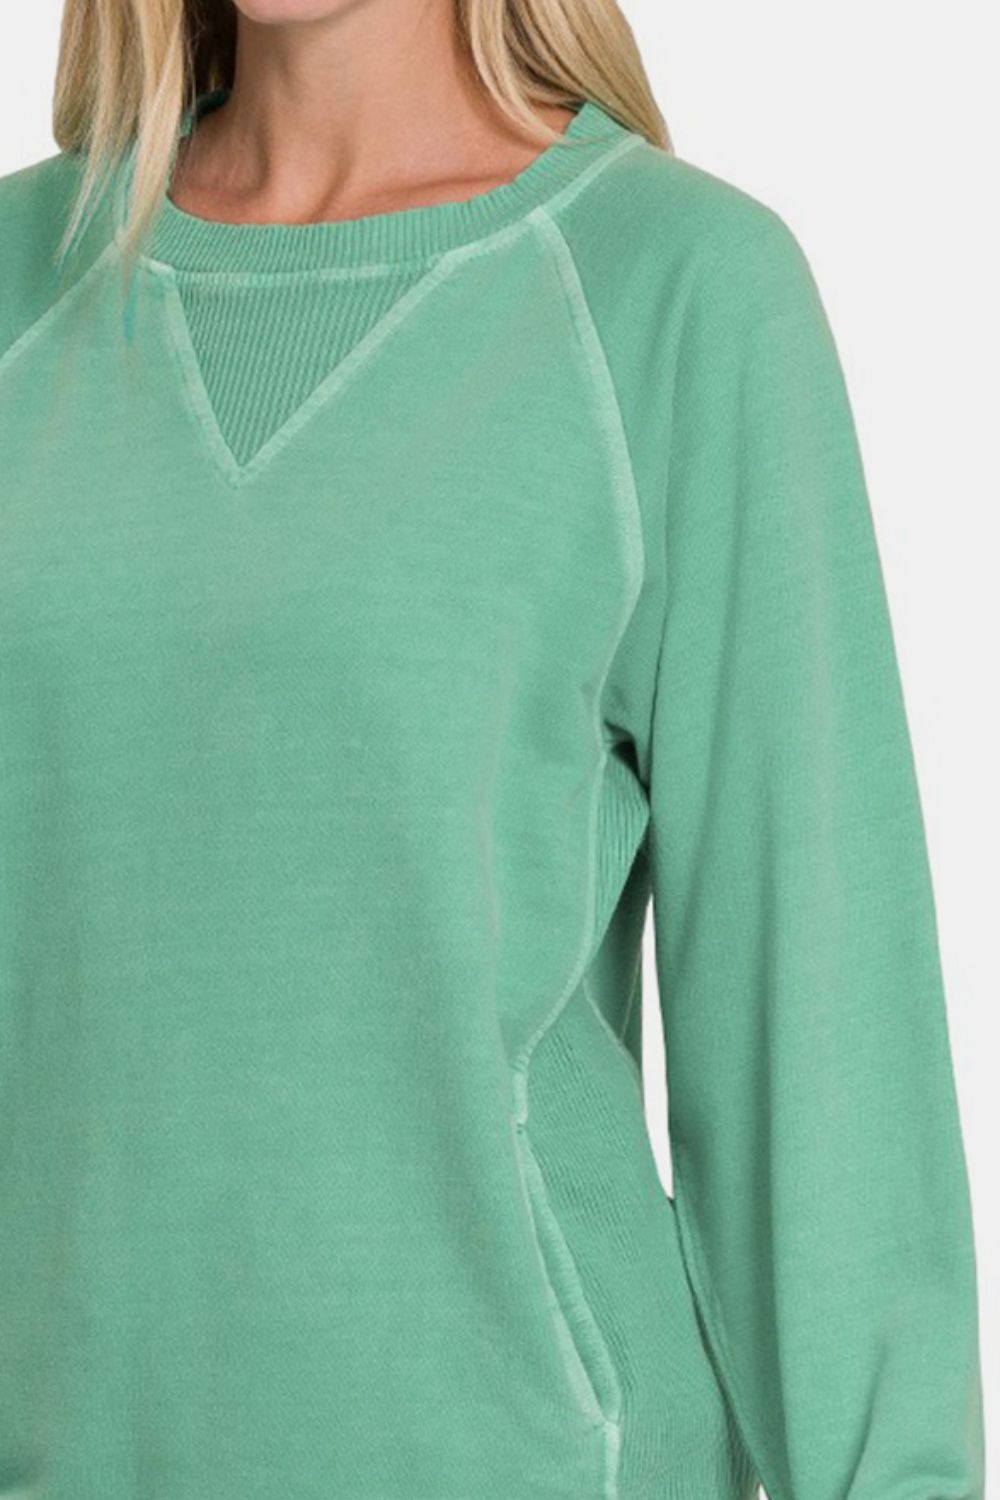 Zenana Pocketed Round Neck Long Sleeve Sweatshirt - Three Bears Boutique